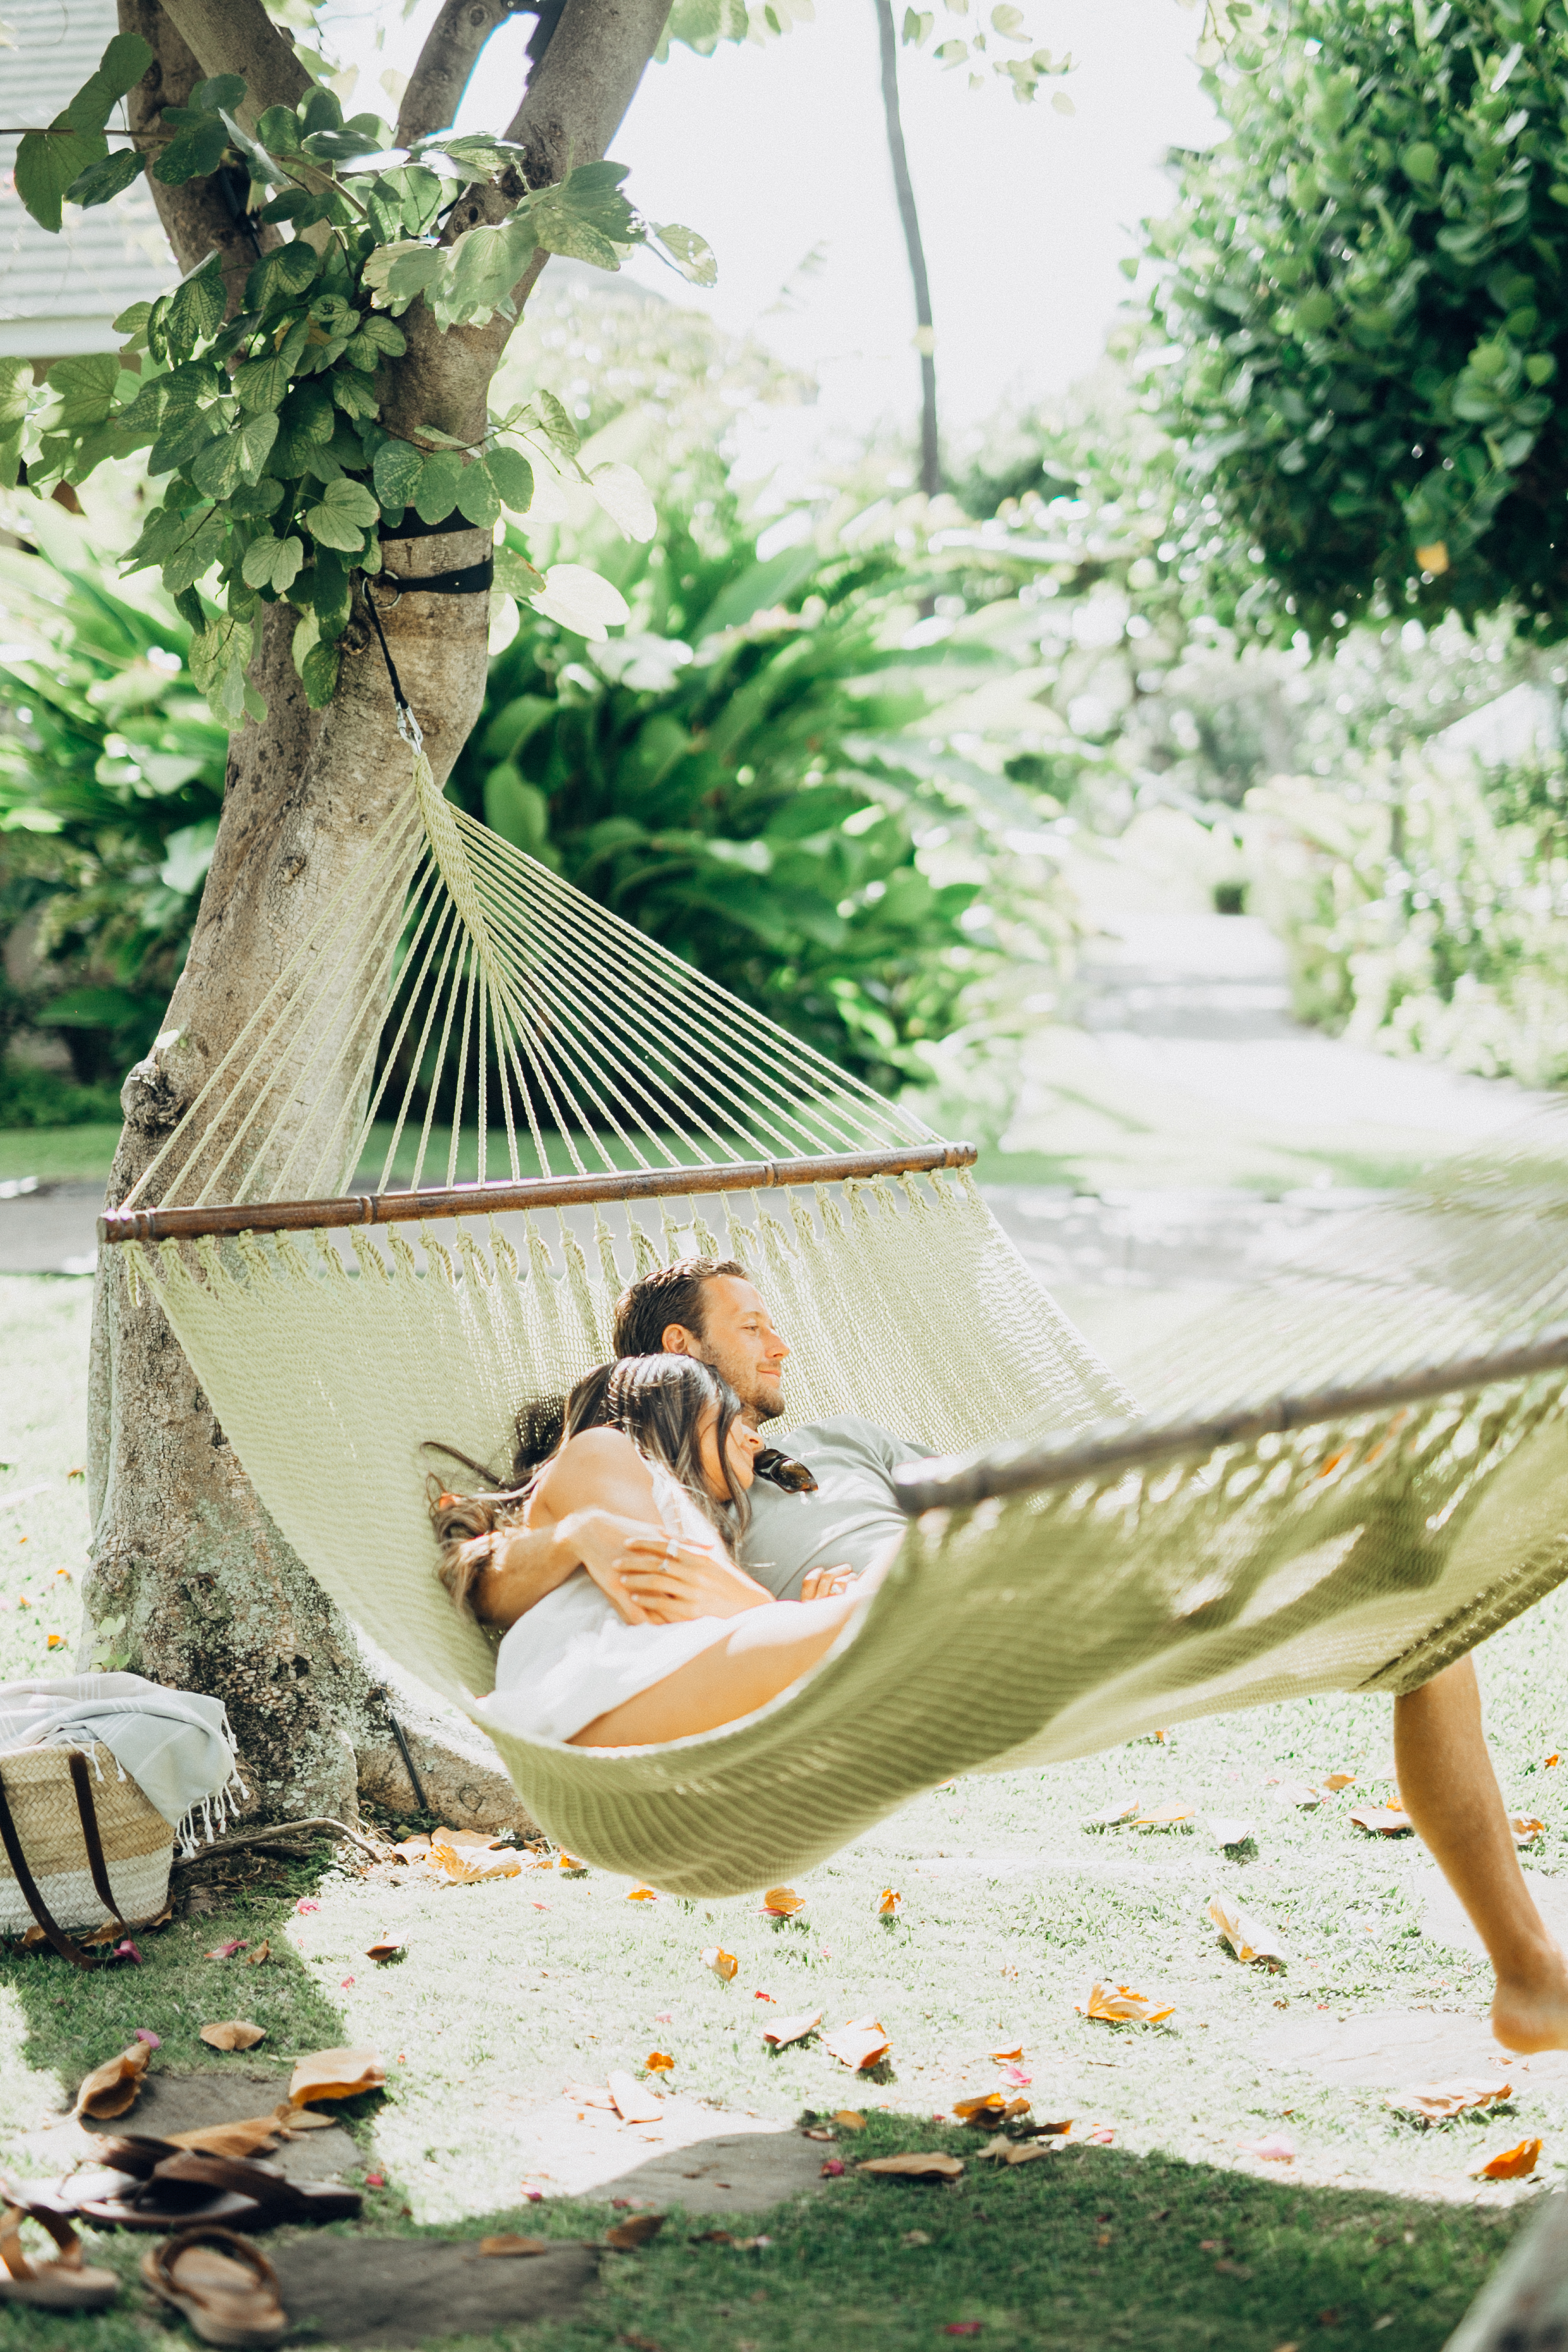 Traveling Couple | Travel Inspiration | Hawaiian Island Hopping | Hotel Wailea | Weekend In Maui | Guide to Spending The Weekend in Maui | Travel Blogger's Maui Recommendations via @elanaloo + elanaloo.com